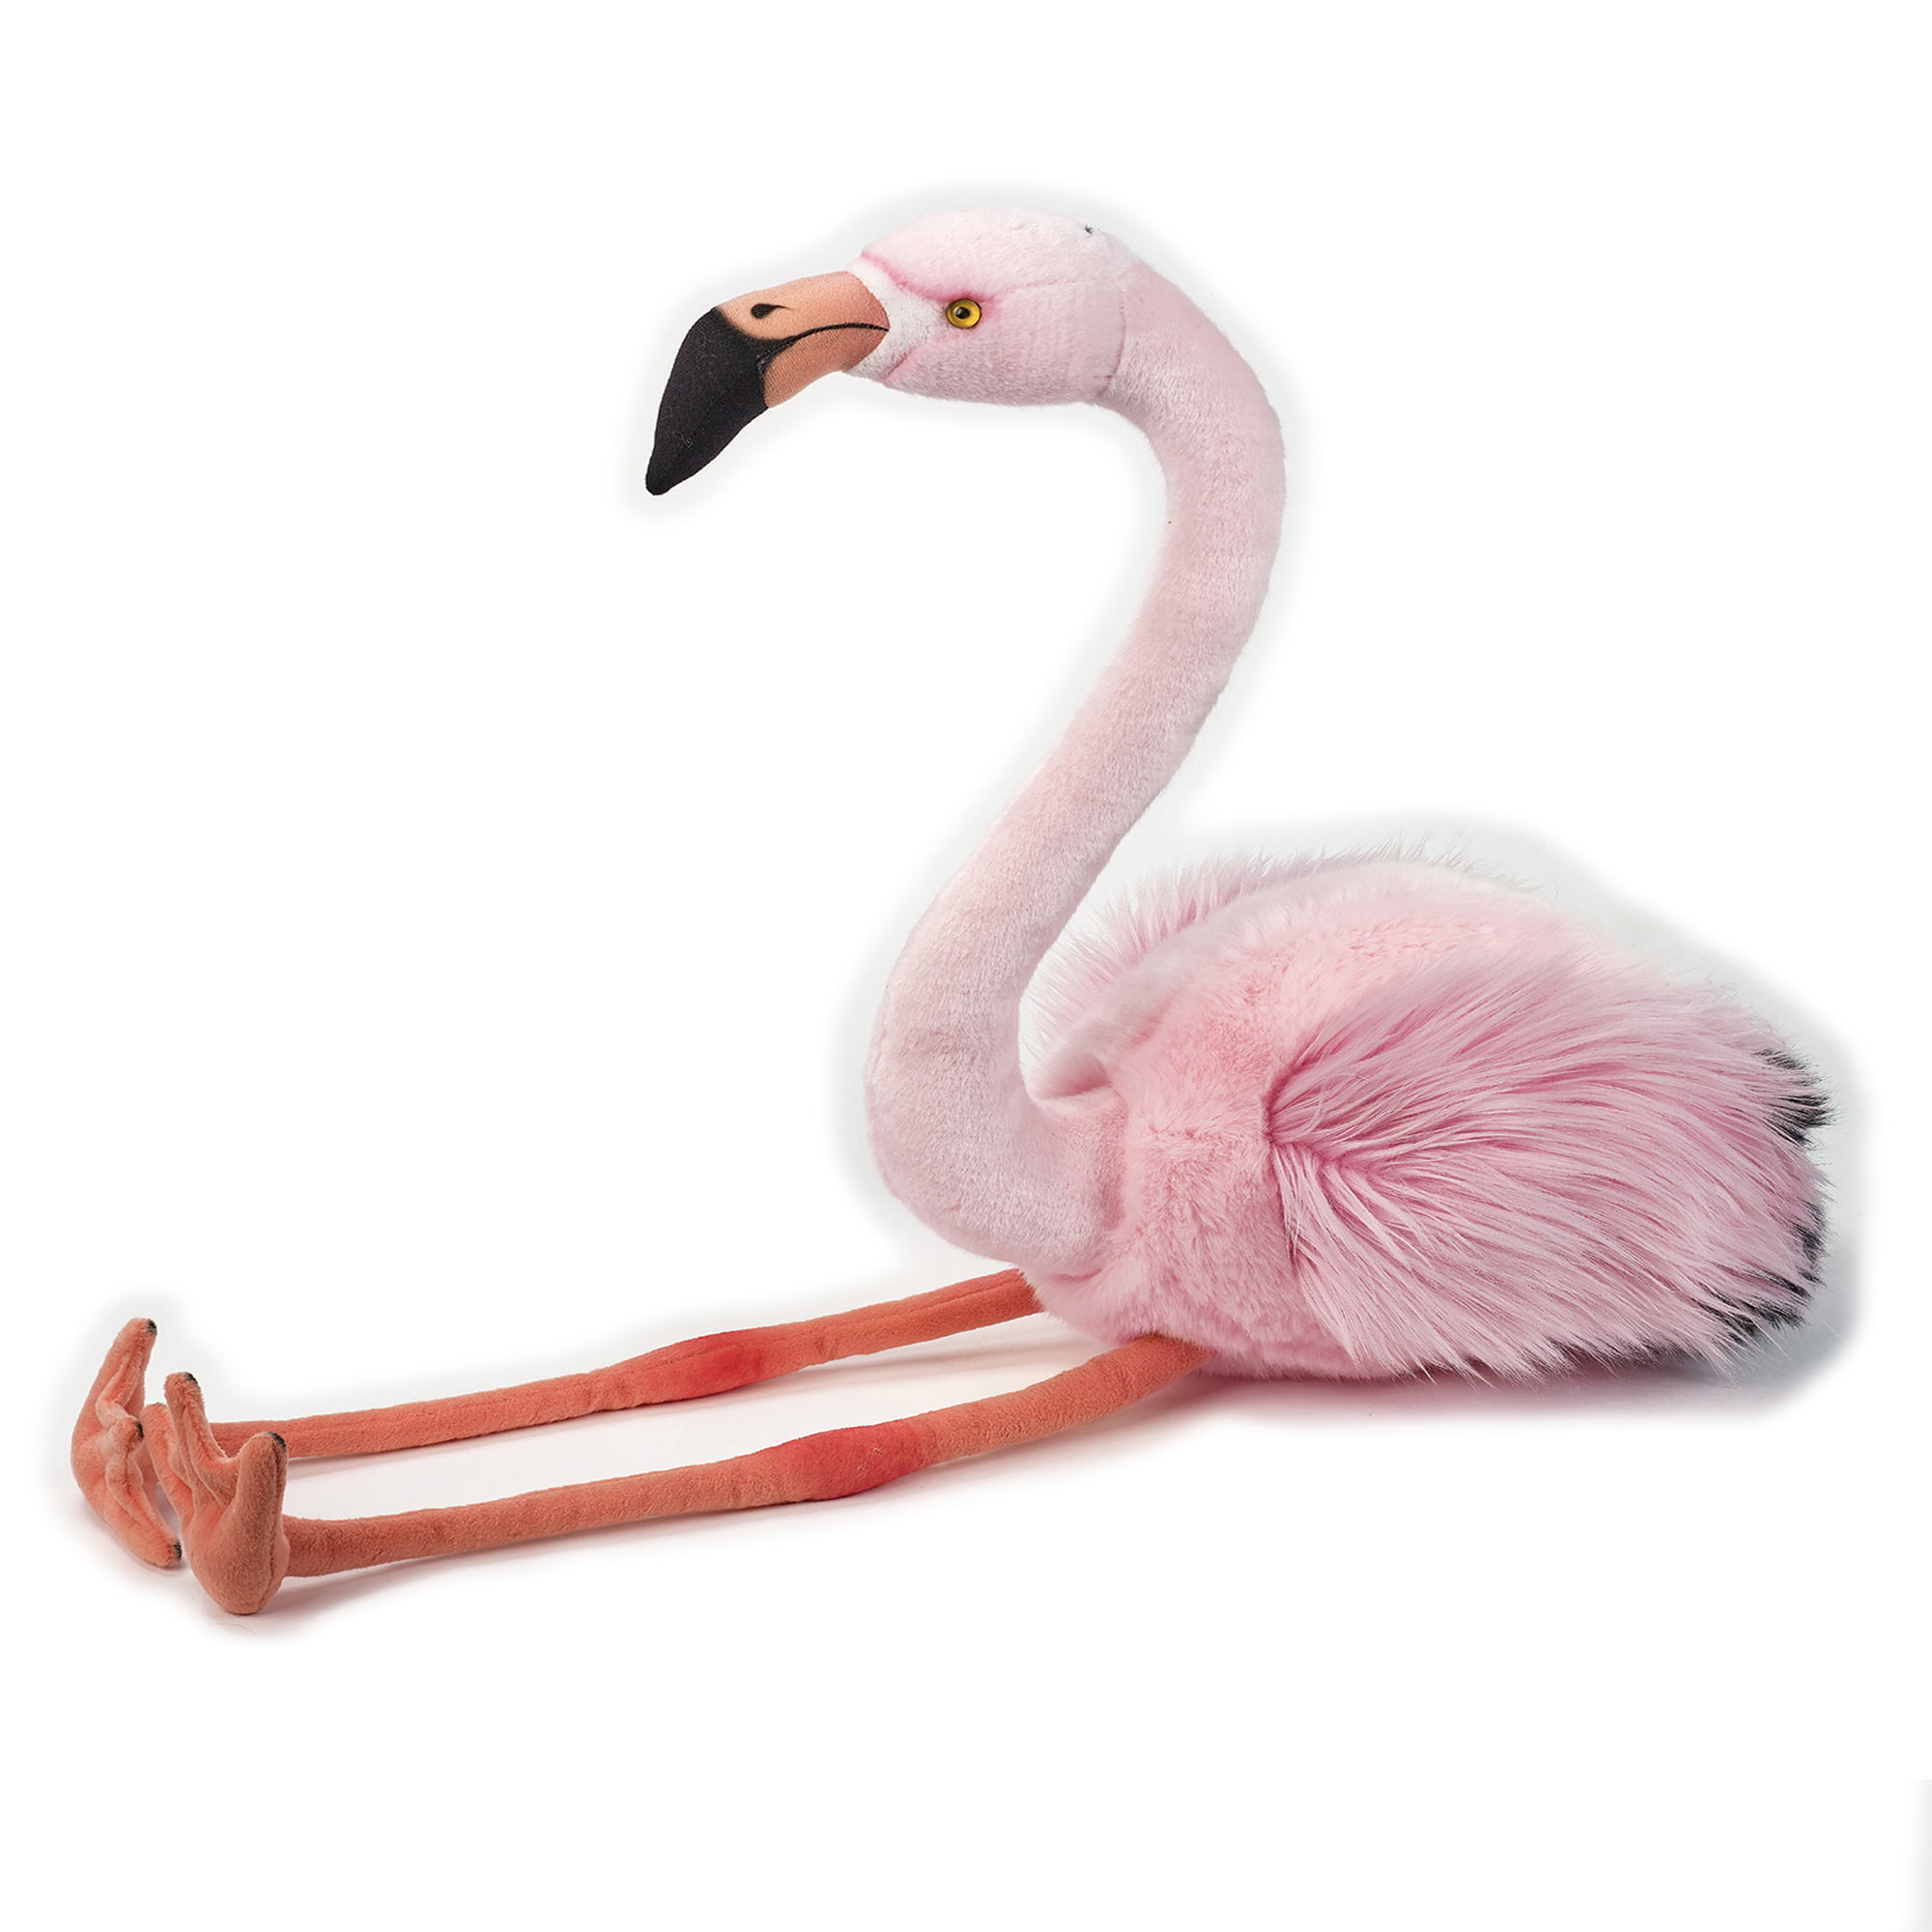 CK Lil's Plüsch Flamingo Wild Republic 16257 18108 15 cm 